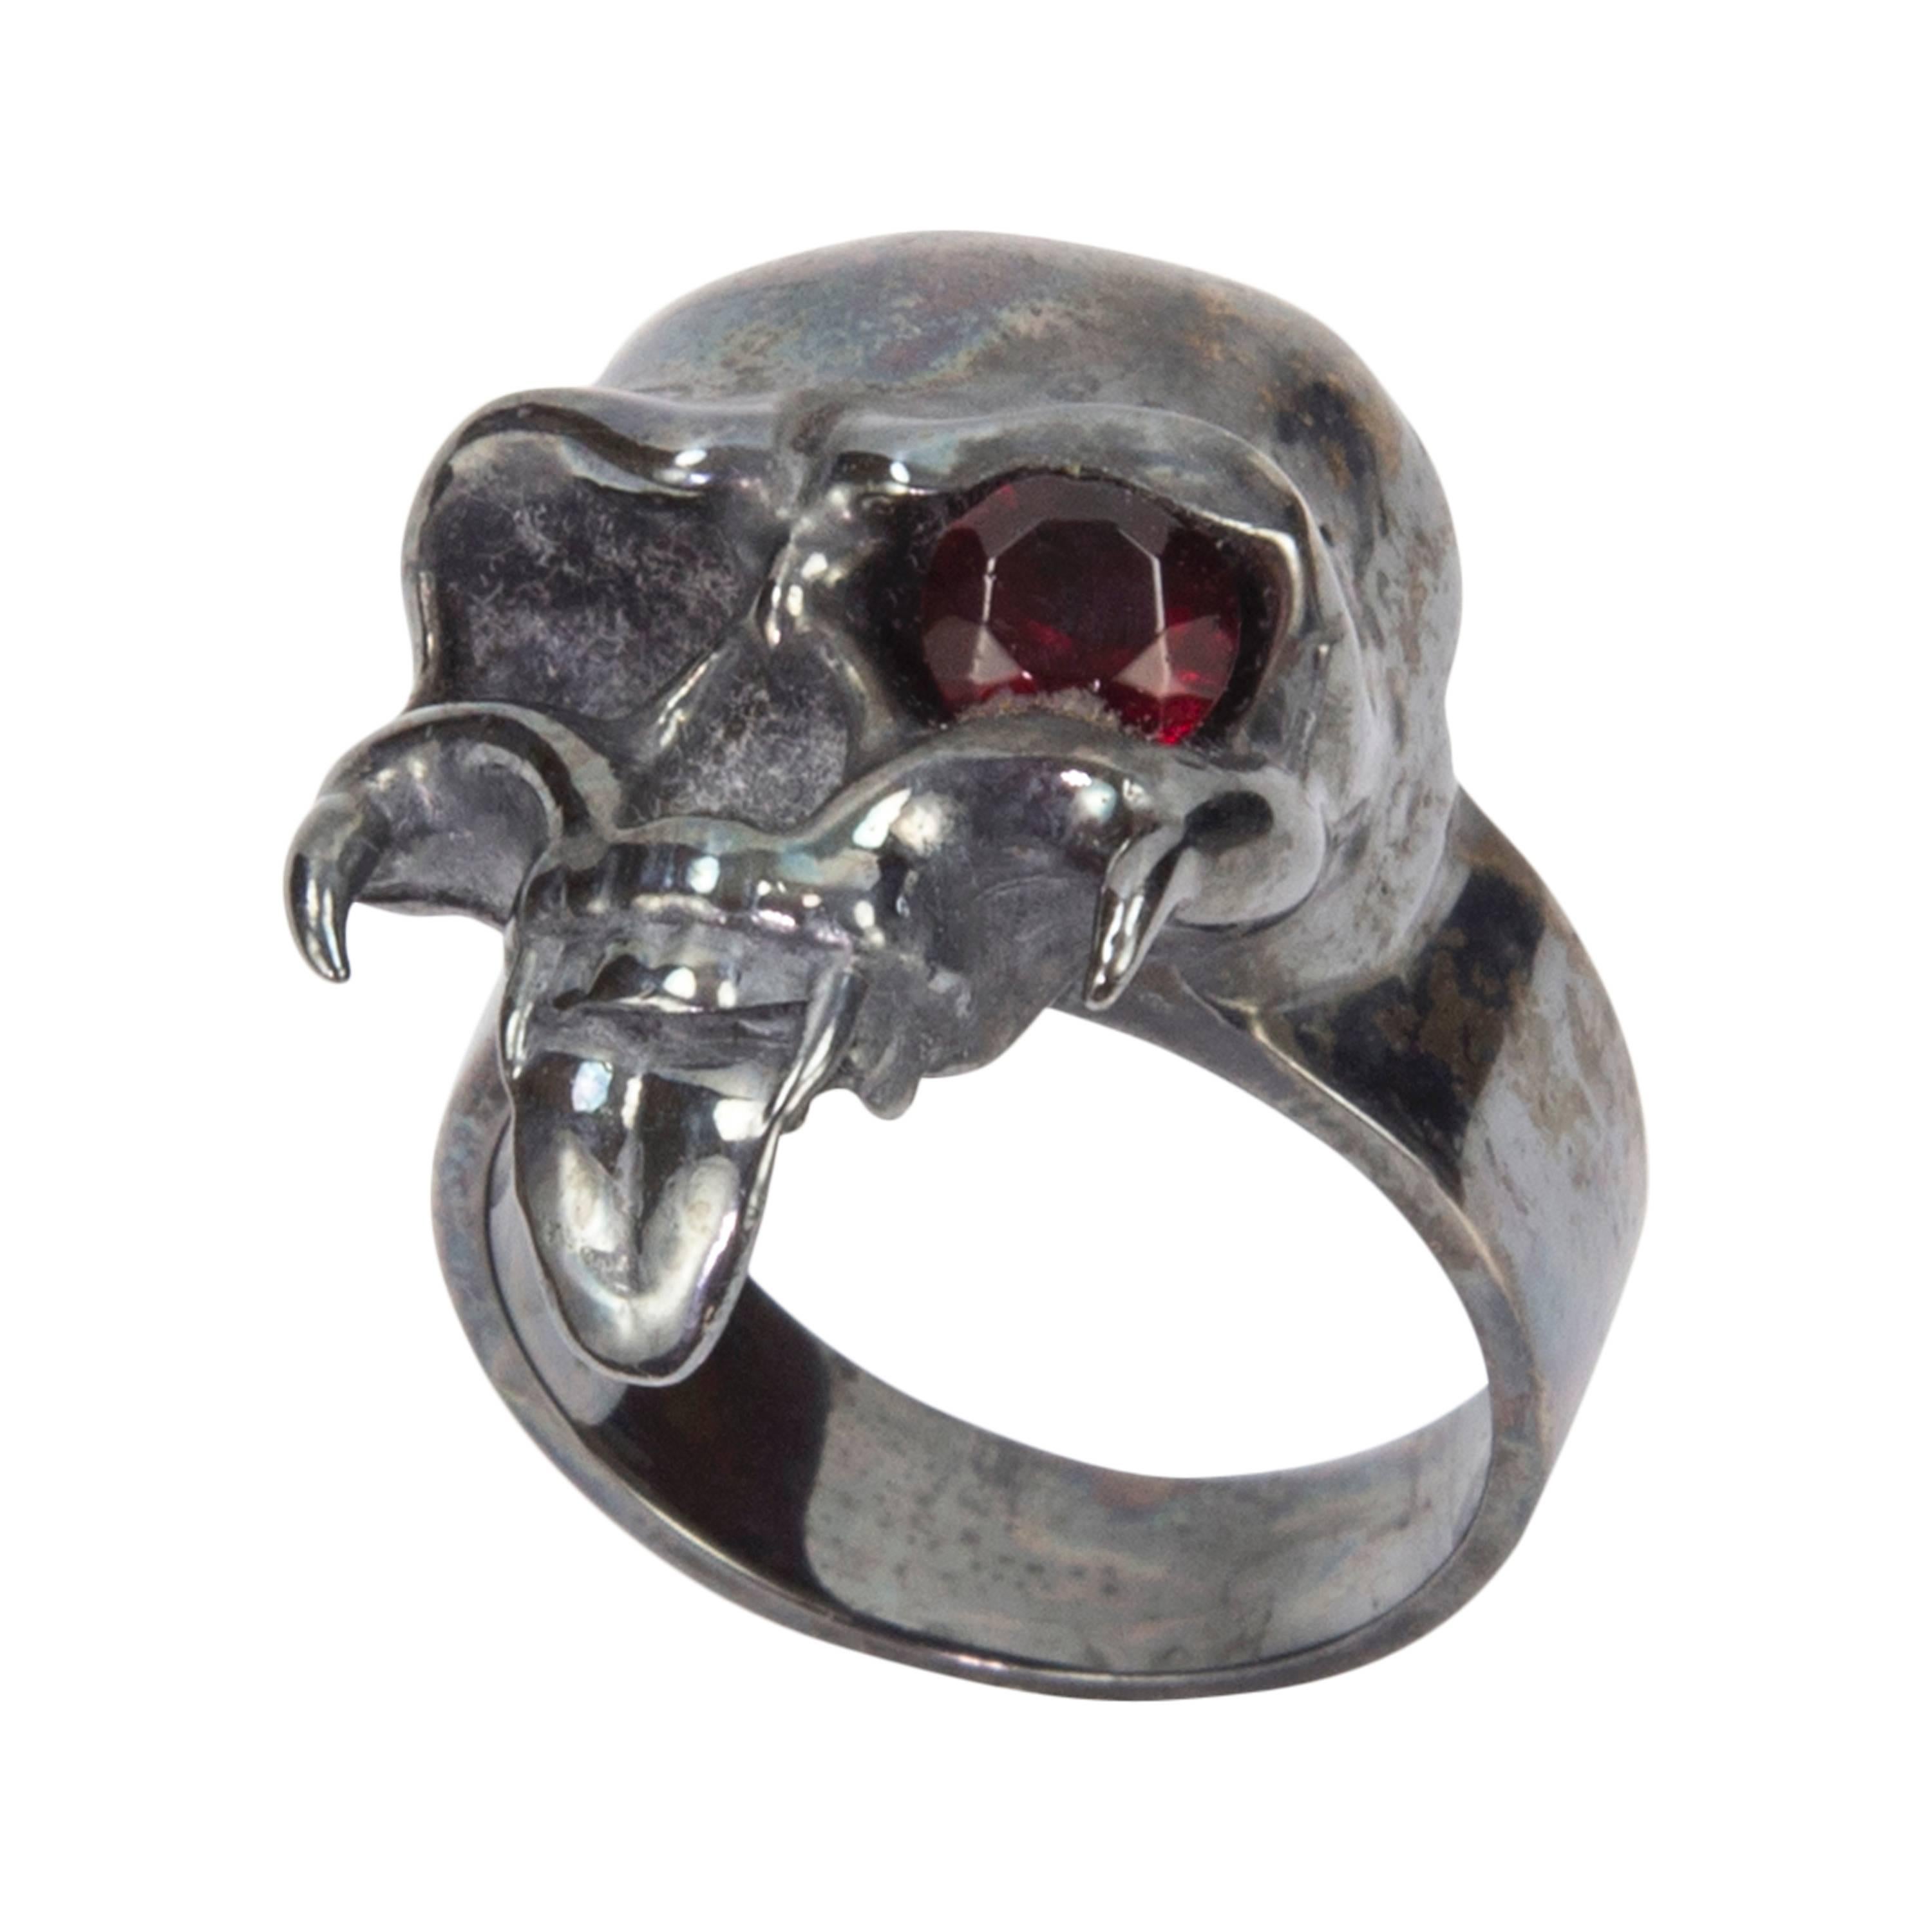 Skull & Cross Bones Ring Natural Aquamarine eyes hand crafted sterling silver 